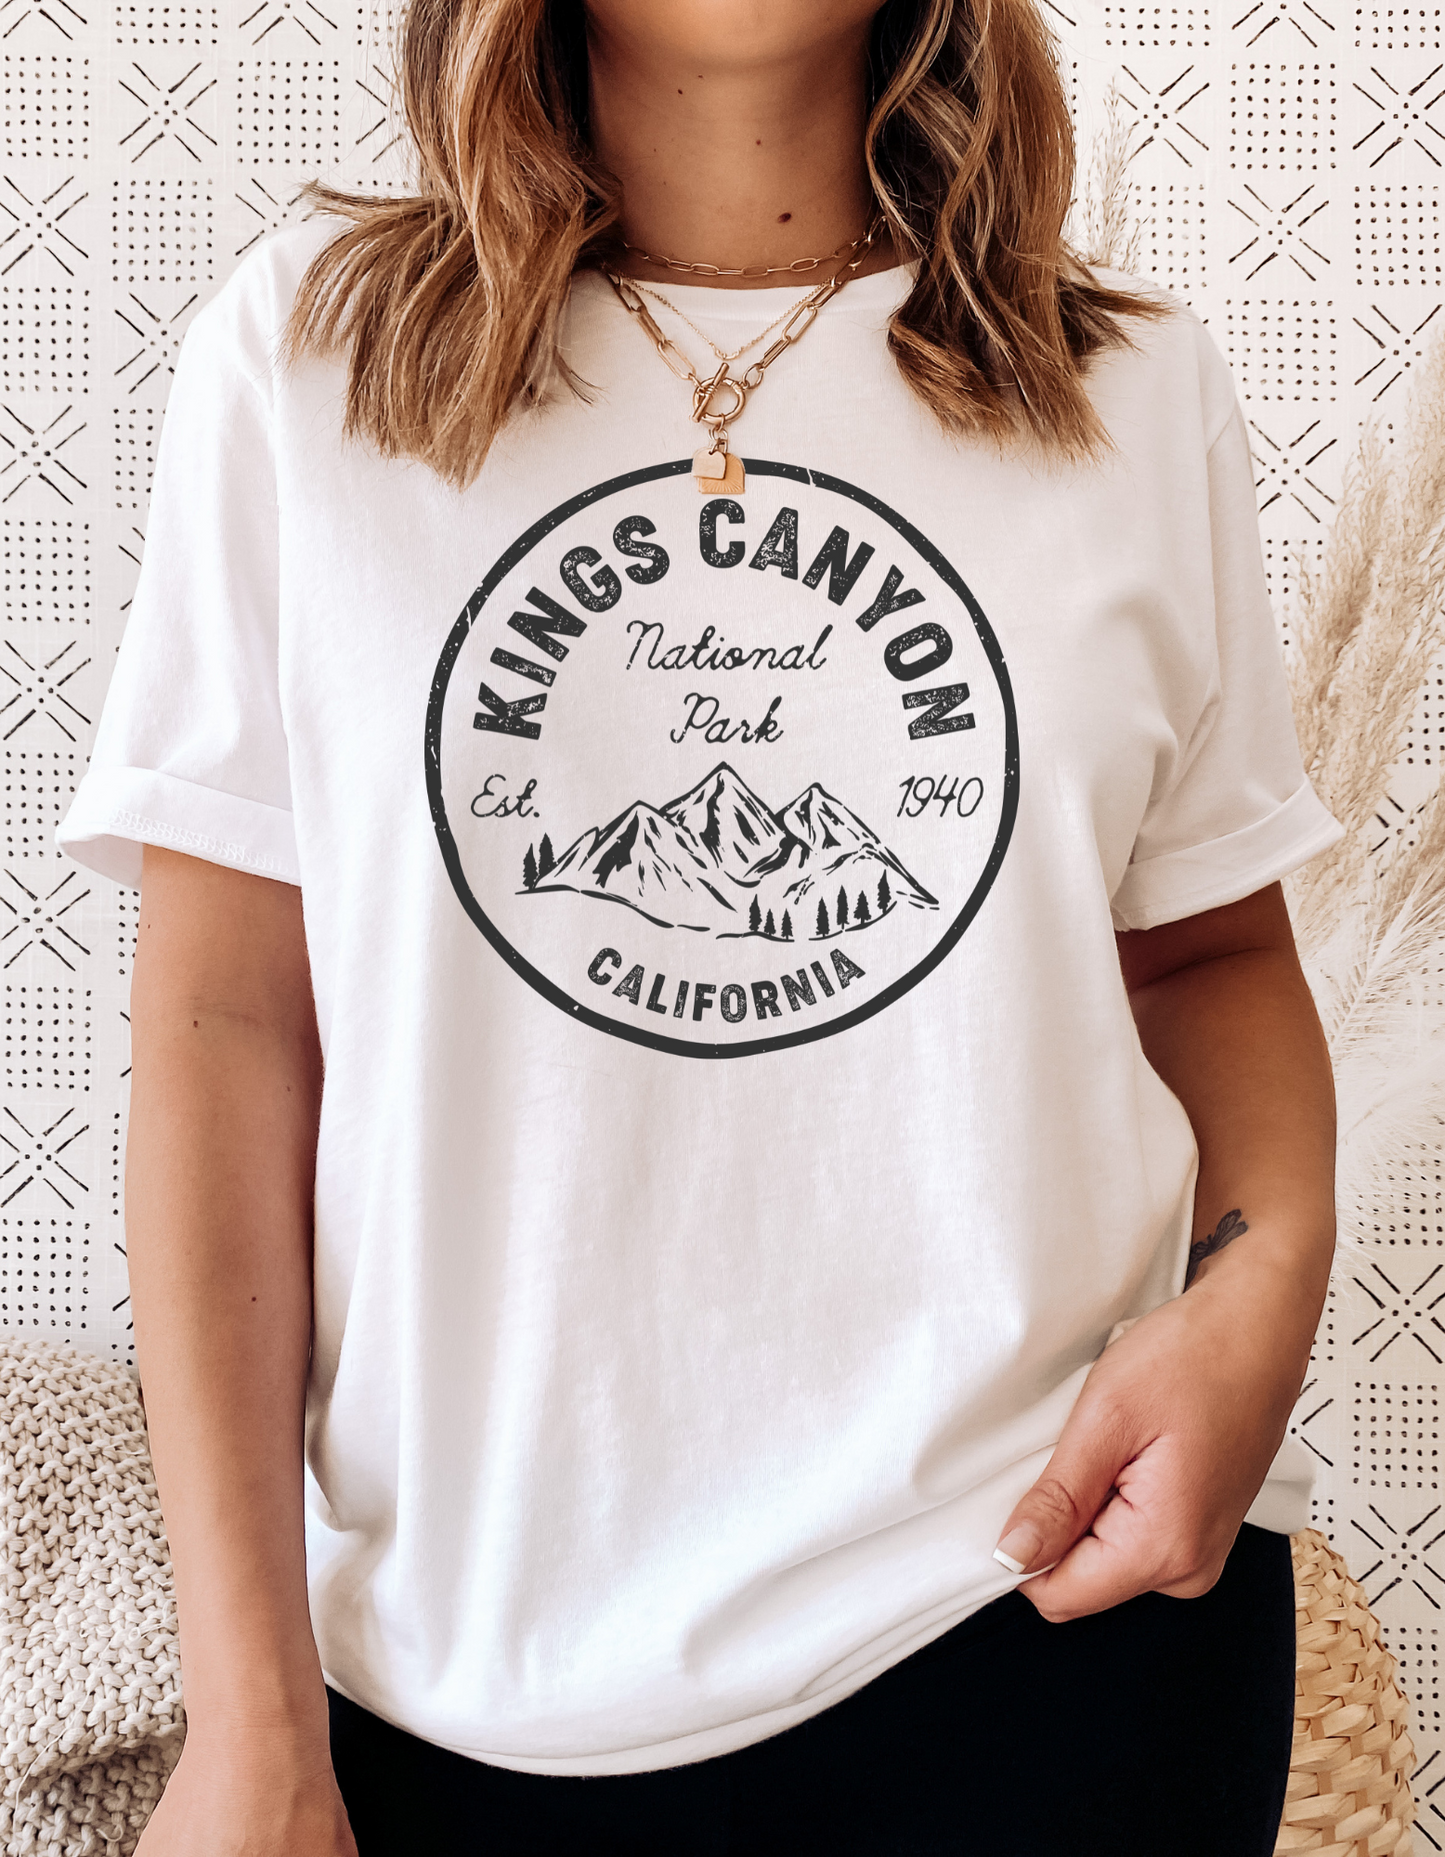 Kings Canyon National Park Unisex T-Shirt